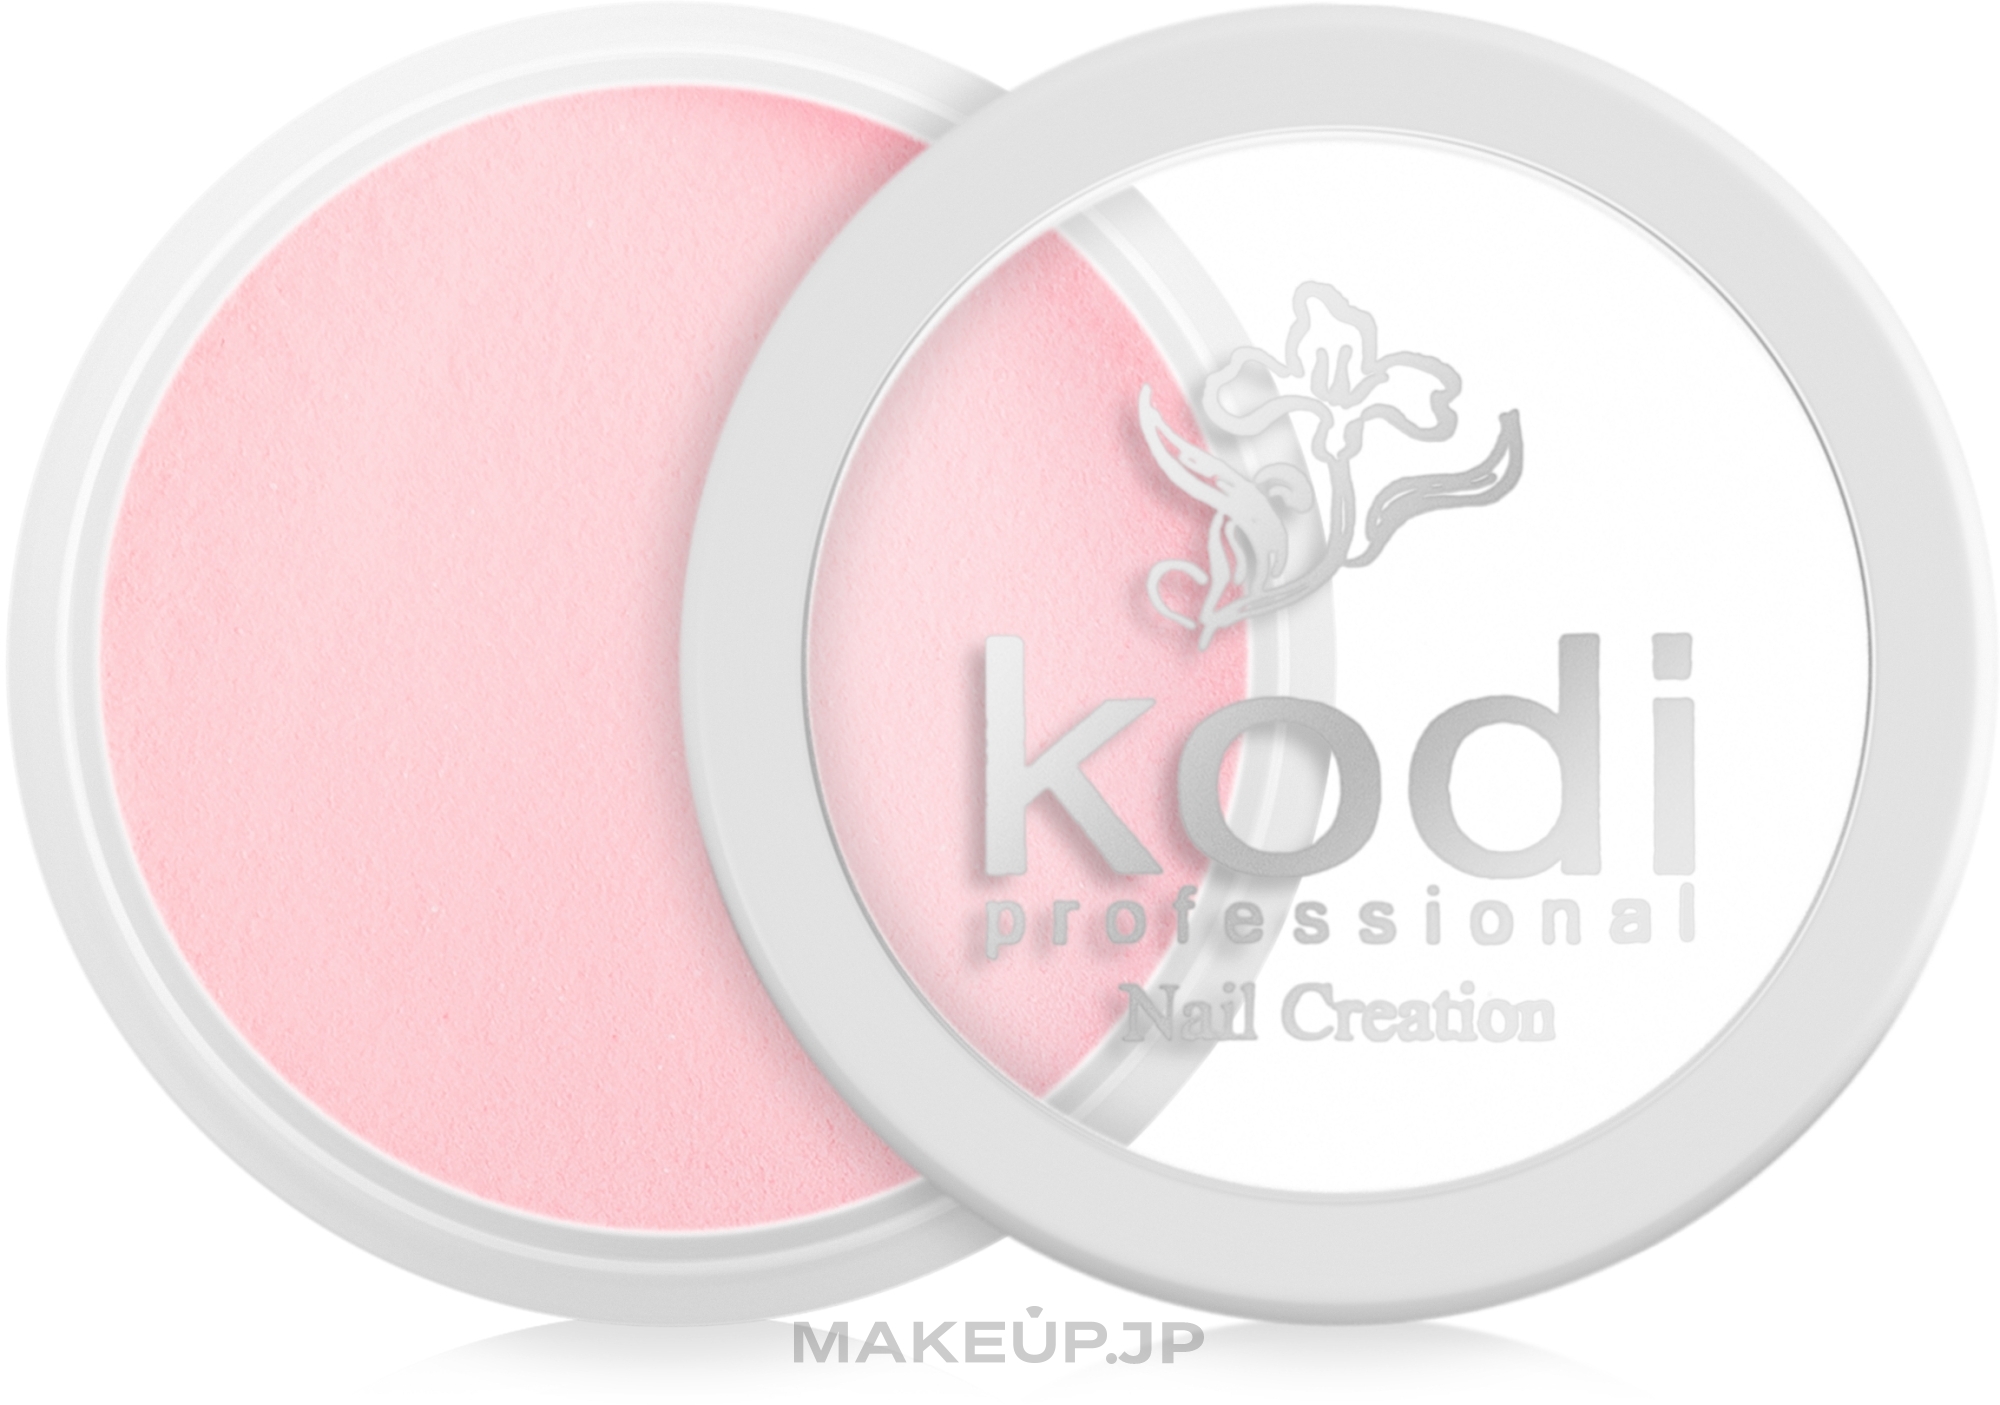 Color Acrylic - Kodi Professional Color Acrylic — photo L2